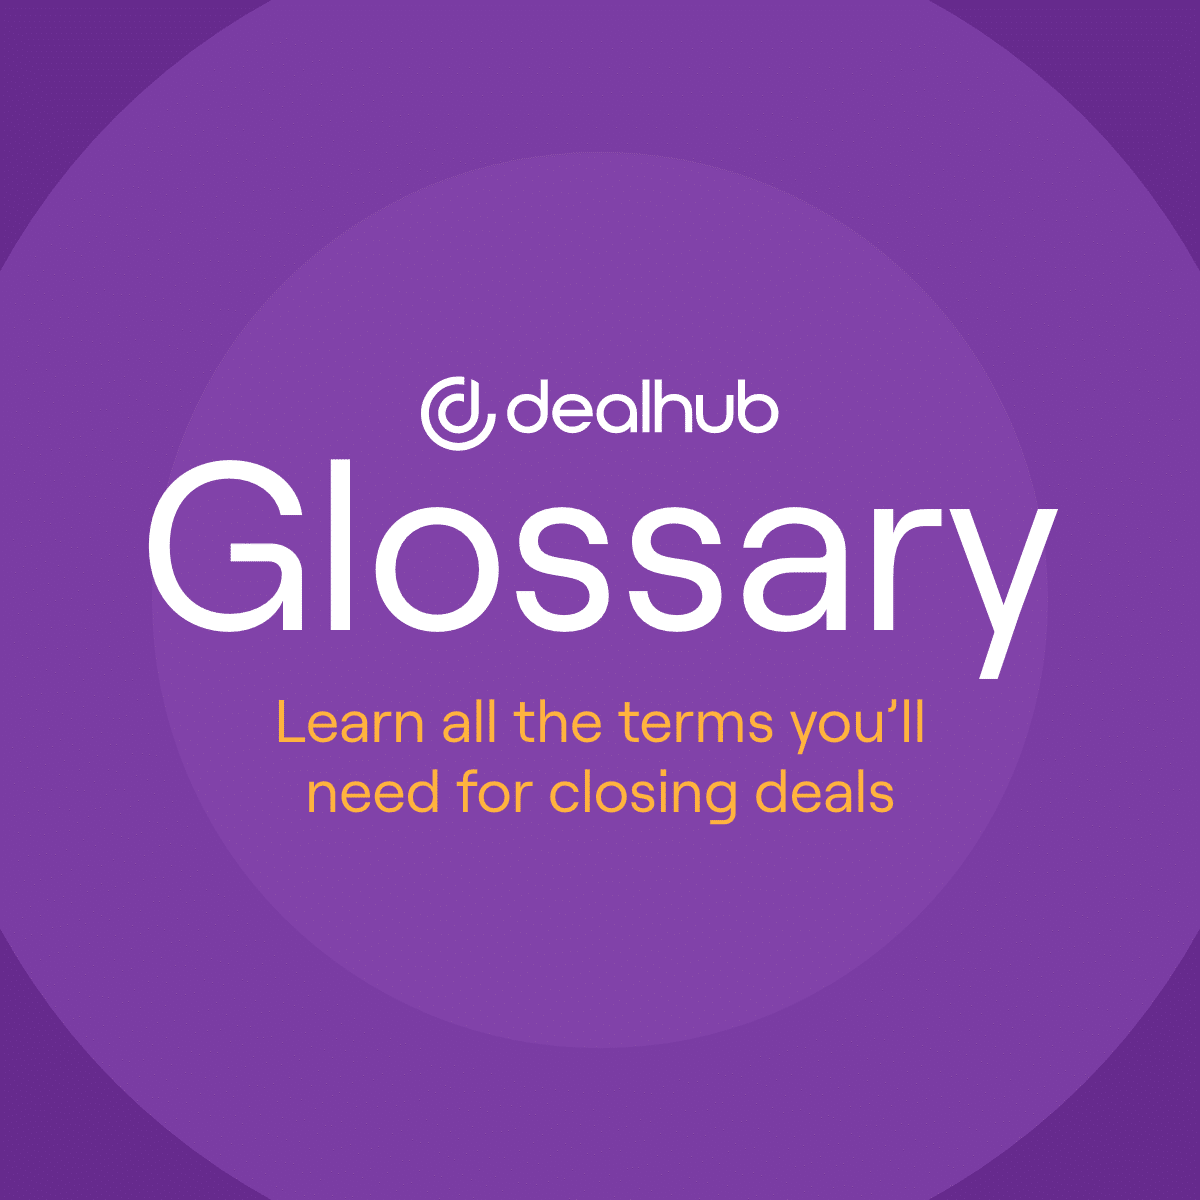 DealHub's Sales Glossary